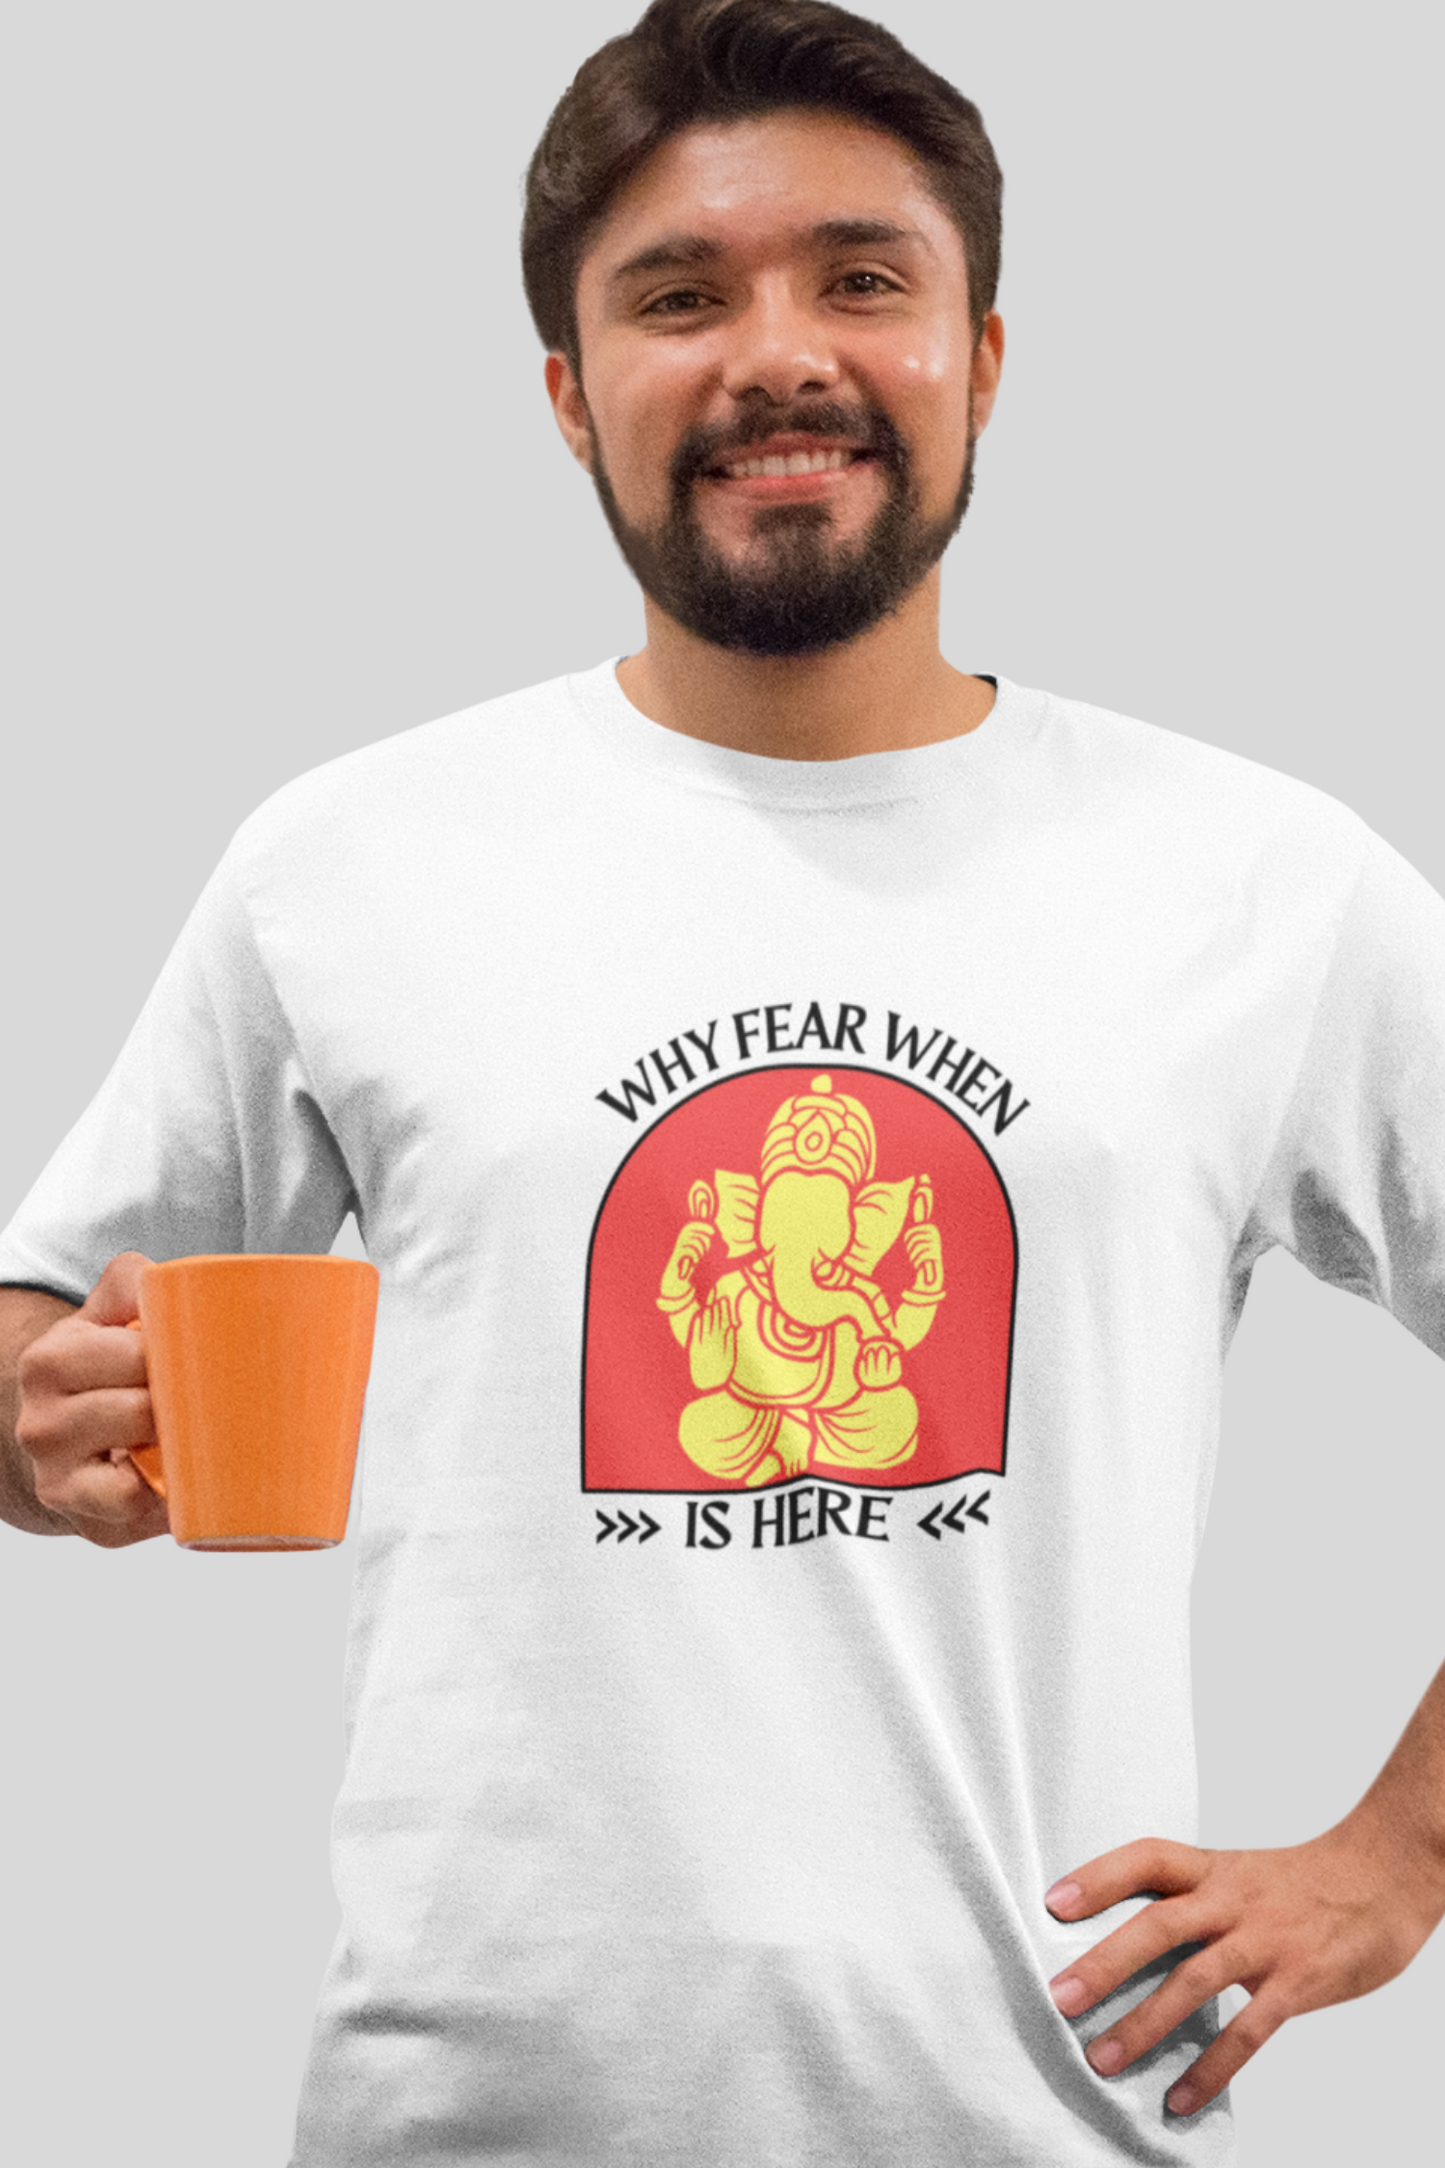 Why fear when Ganesha is here, Ganesh Chaturthi T-Shirt, Ganpati T-shirt 2022 - nautunkee